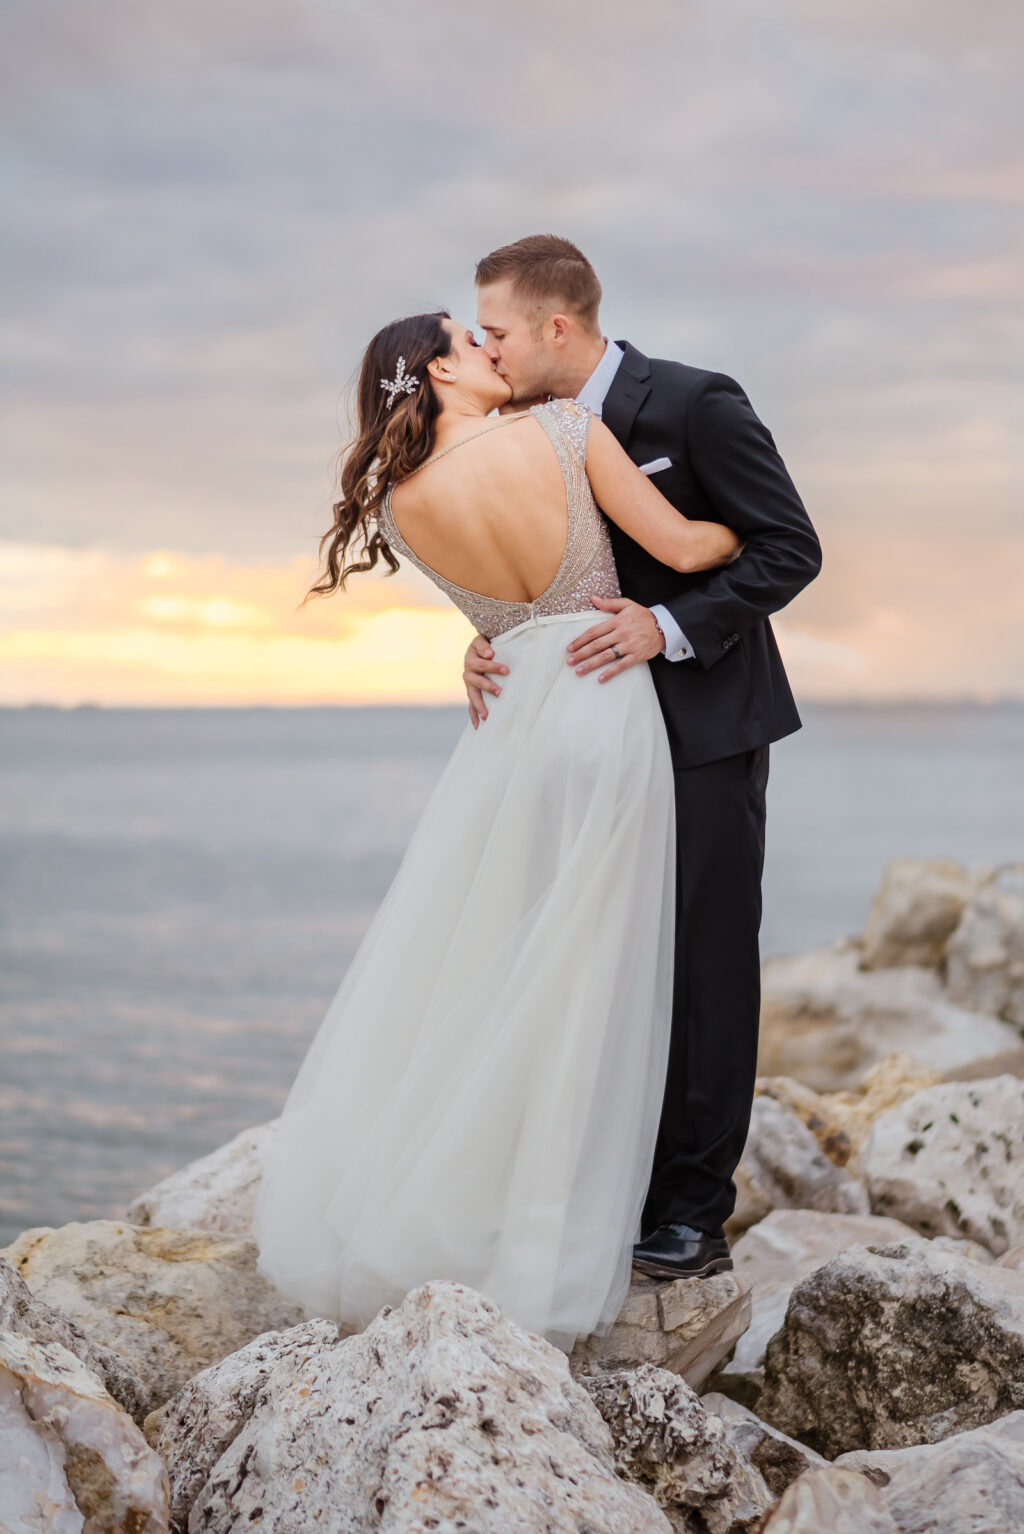 Sunset Bride and Groom Wedding Photo on Rocks on Tampa Beach